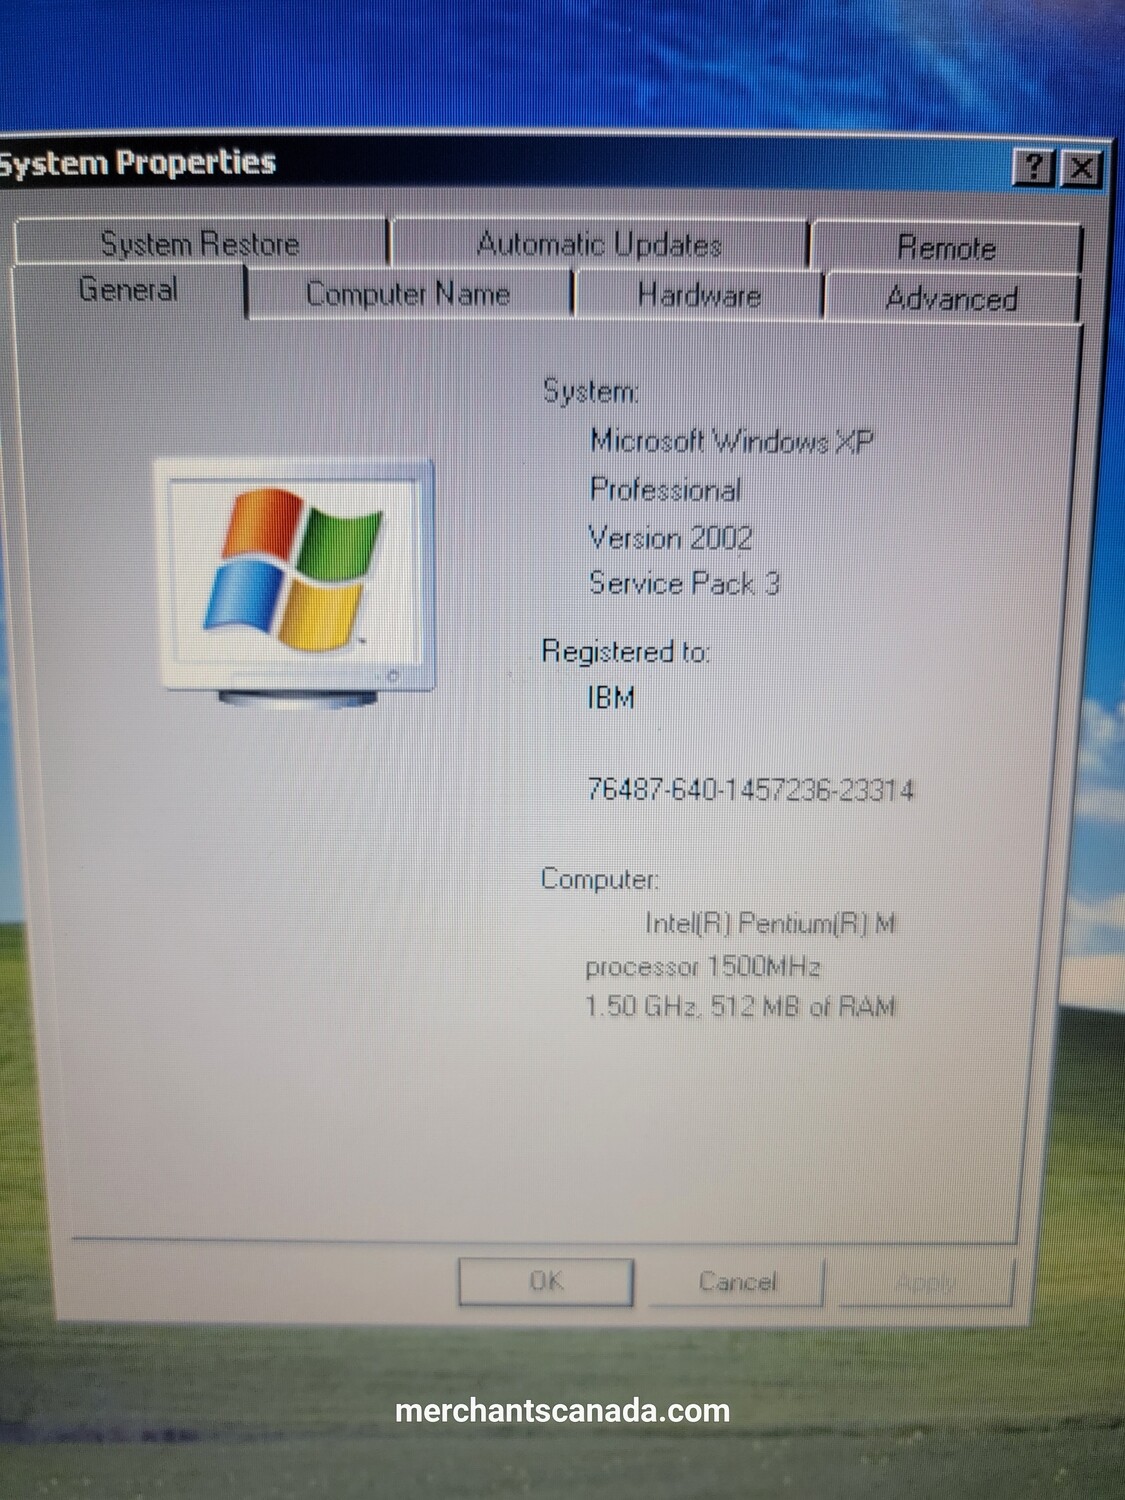 IBM ThinkPad T40 Pentium M 1.5 GHz | 512MB | 40GB | DVD+ | 14" Windows XP Loaded with License | 2373-7CU